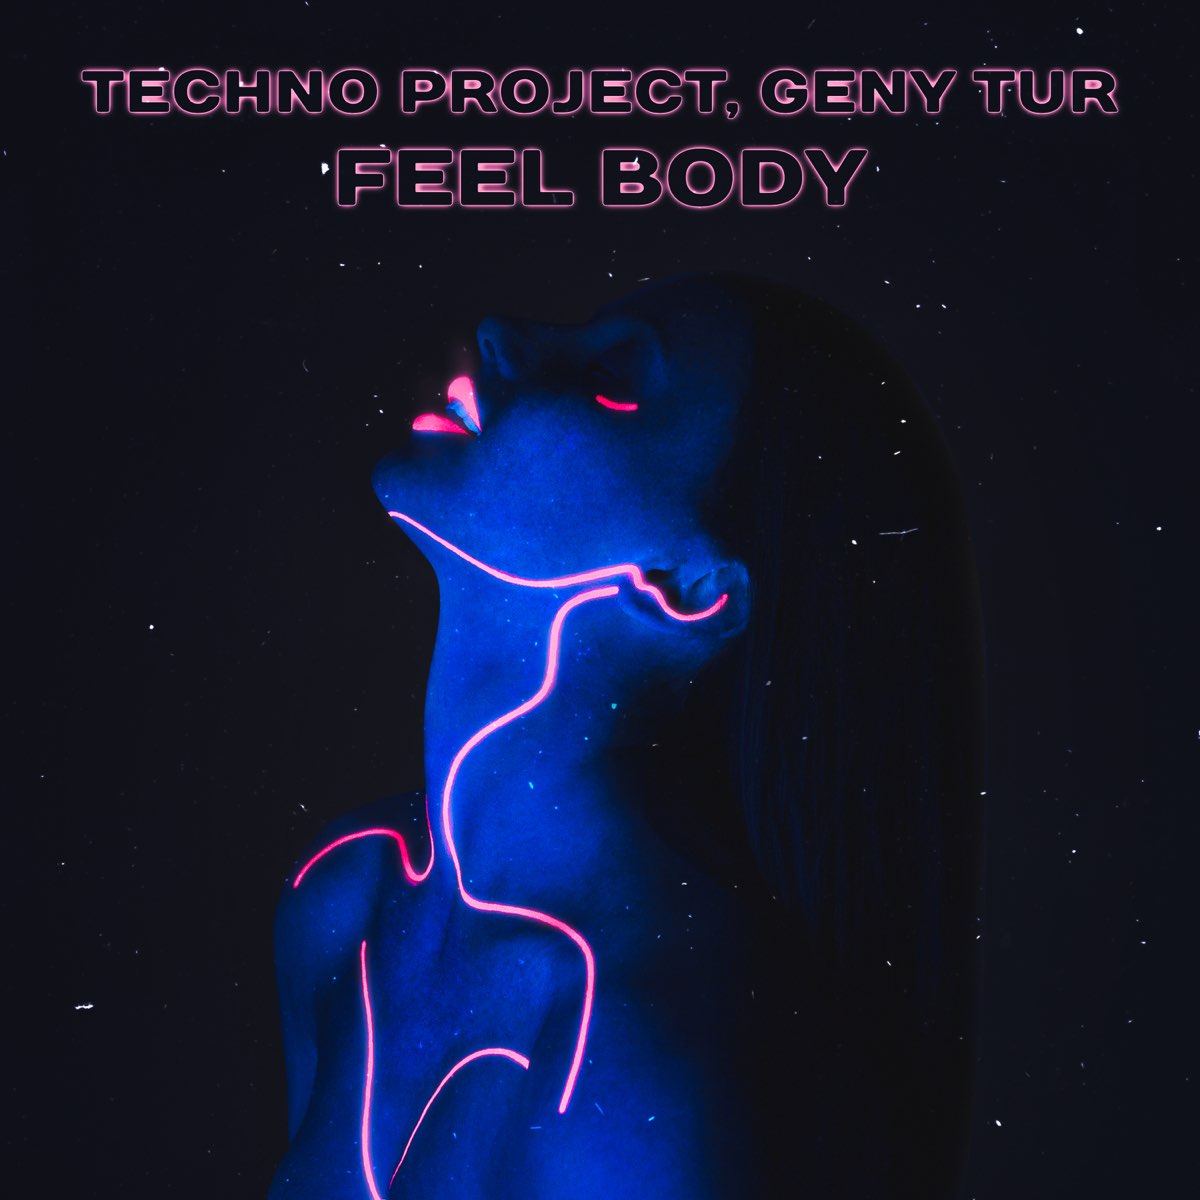 Fell me песня. Techno Project feel body. Techno Project, Geny Tur. Feel body Techno Project, Geny Tur. Пепел (Remix) Emma Frey feat. Techno Project & Geny Tur.